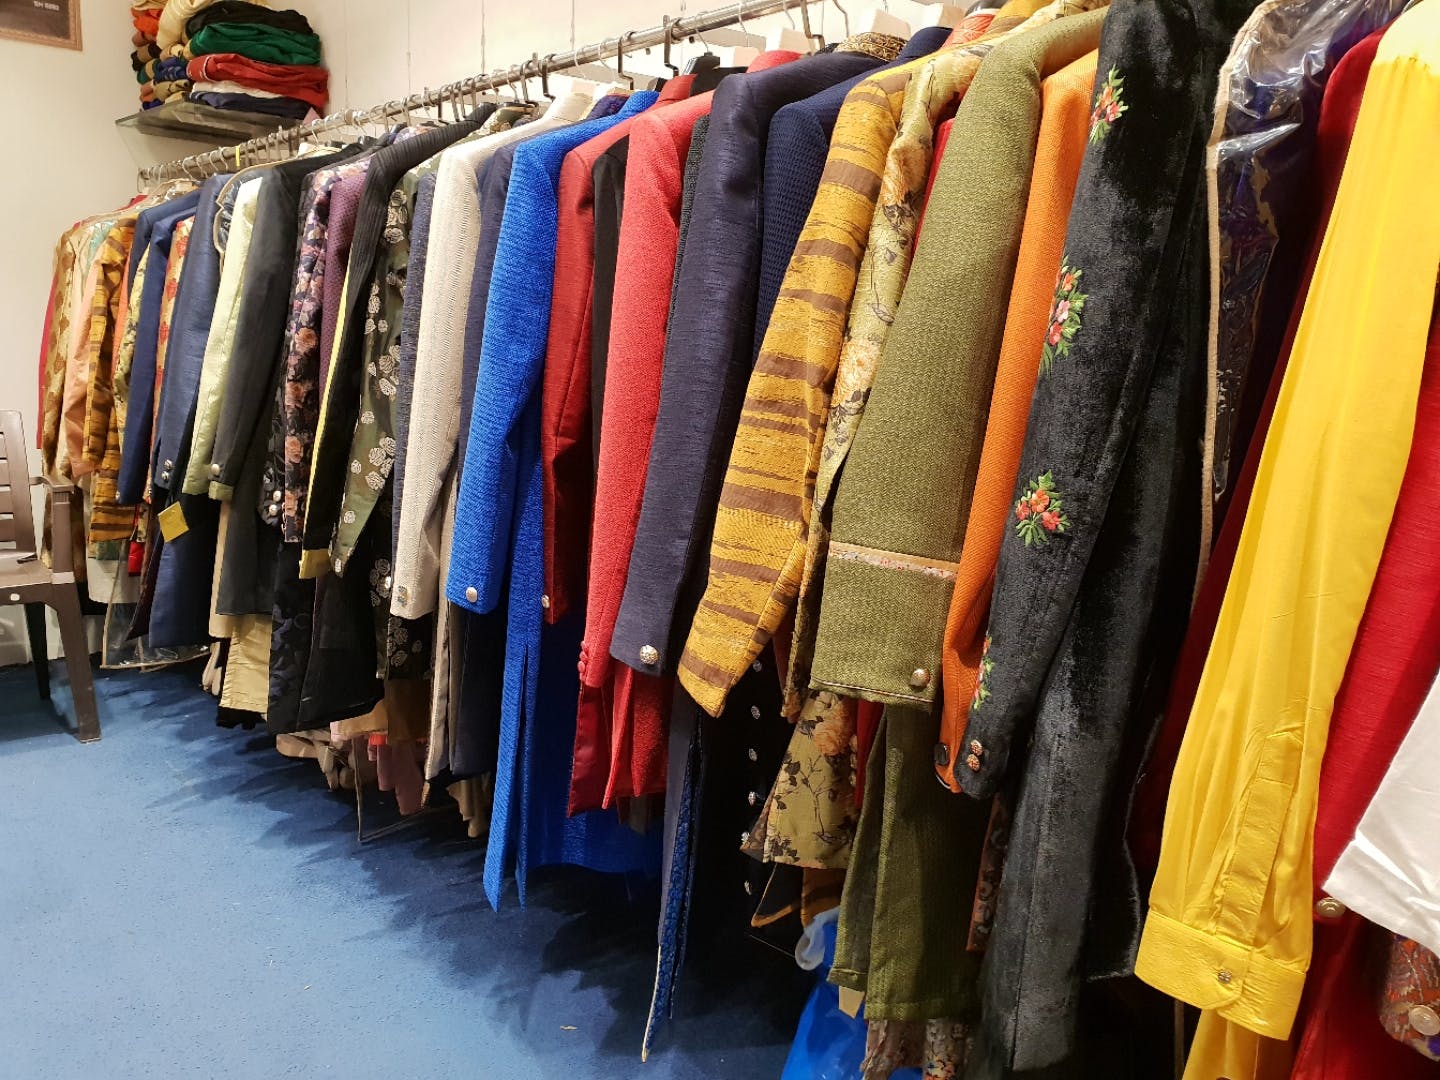 Clothing,Boutique,Room,Textile,Closet,Bazaar,Outlet store,Outerwear,Clothes hanger,Wardrobe